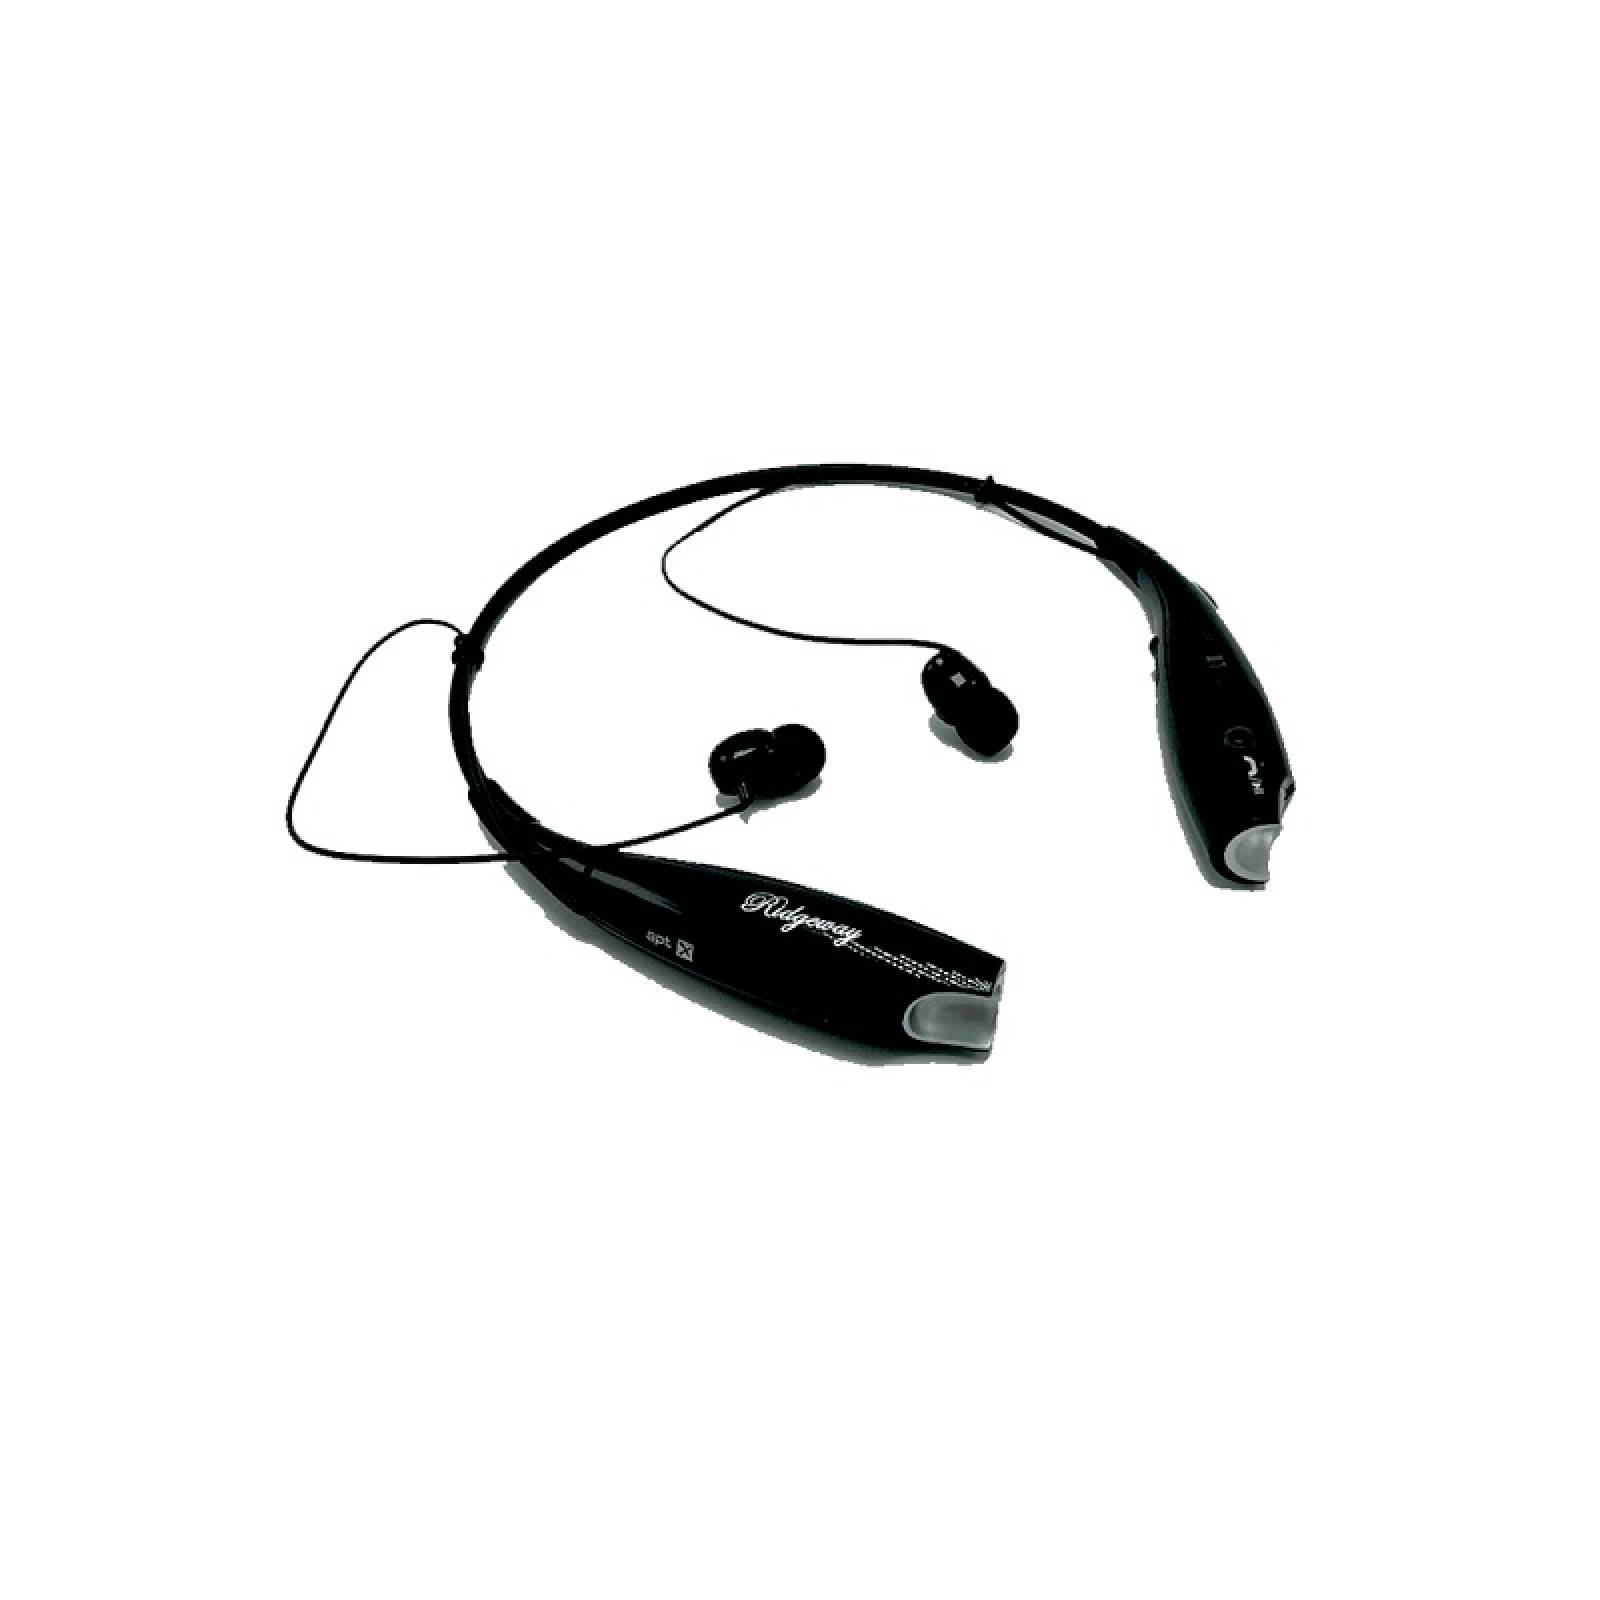 Audifonos Ridgeway Bluetooth Microfono Negro EAR-800B - Reacondicionado